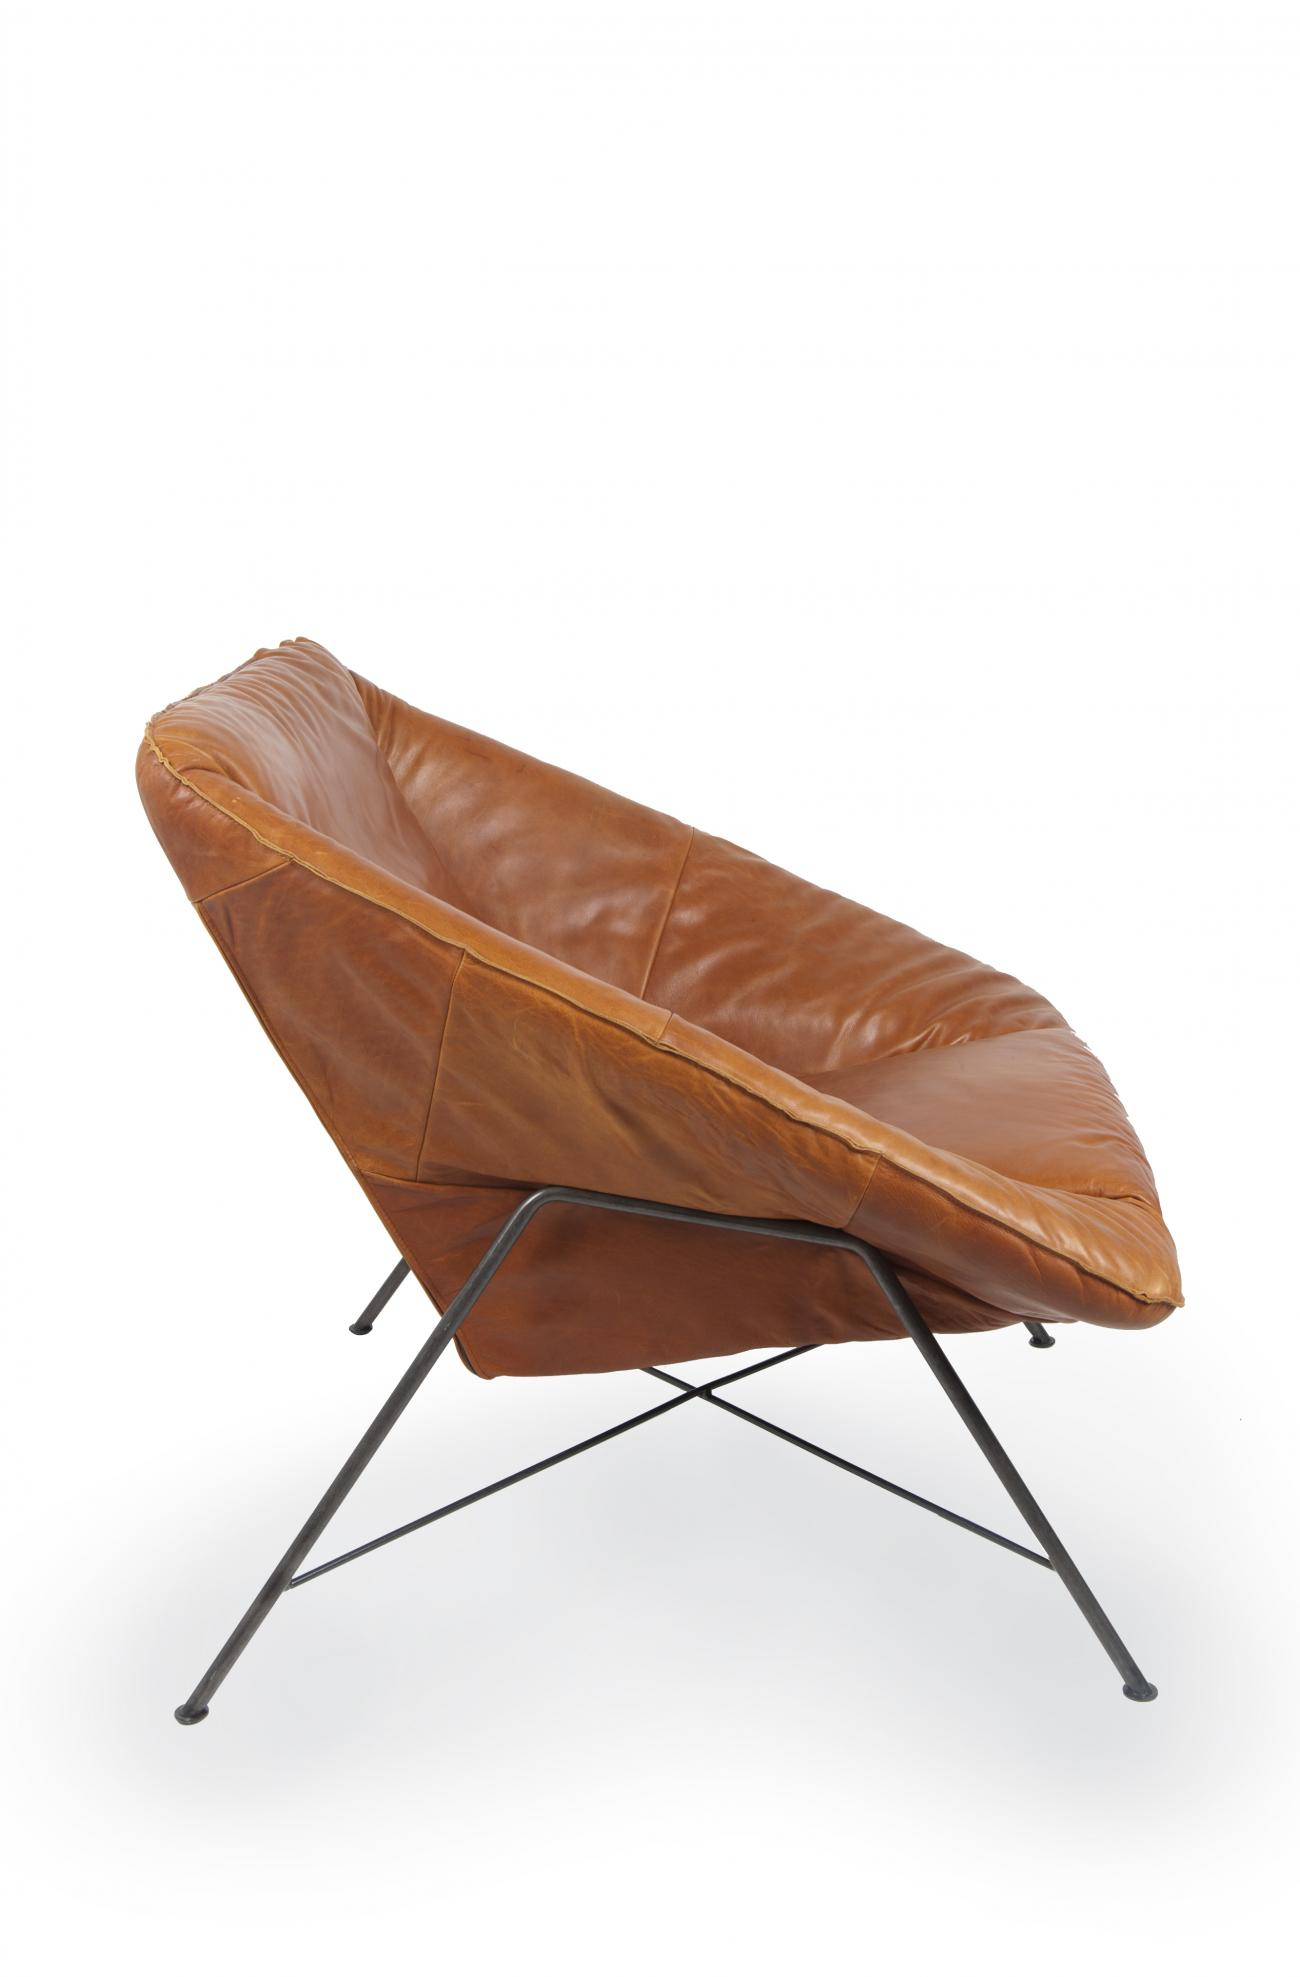 https://www.fundesign.nl/media/catalog/product/b/r/brazil_armchair_with_arm_old_glory_frame_luxor_cognac_side.jpg